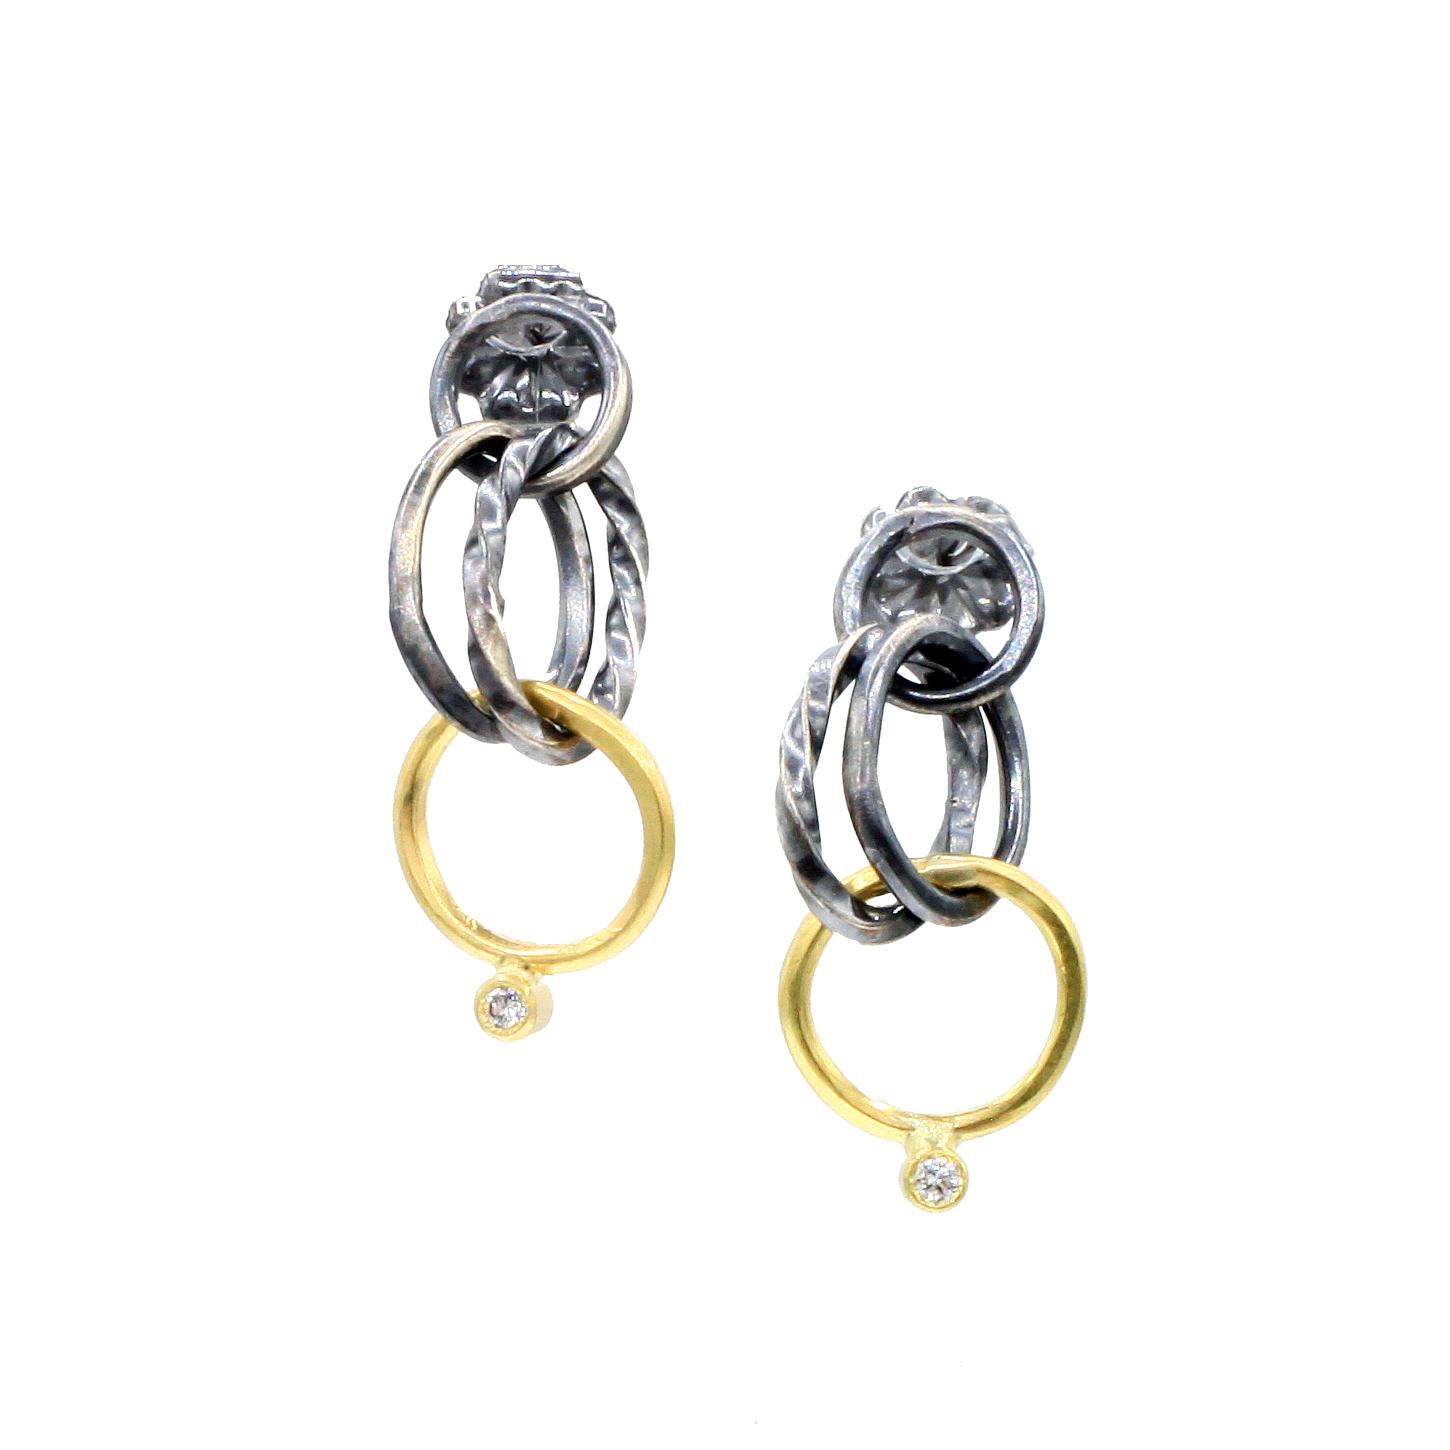 Sarah McGuire Studio | "Wrought Links" Diamond + 18k Gold Post Earrings | Firecracker